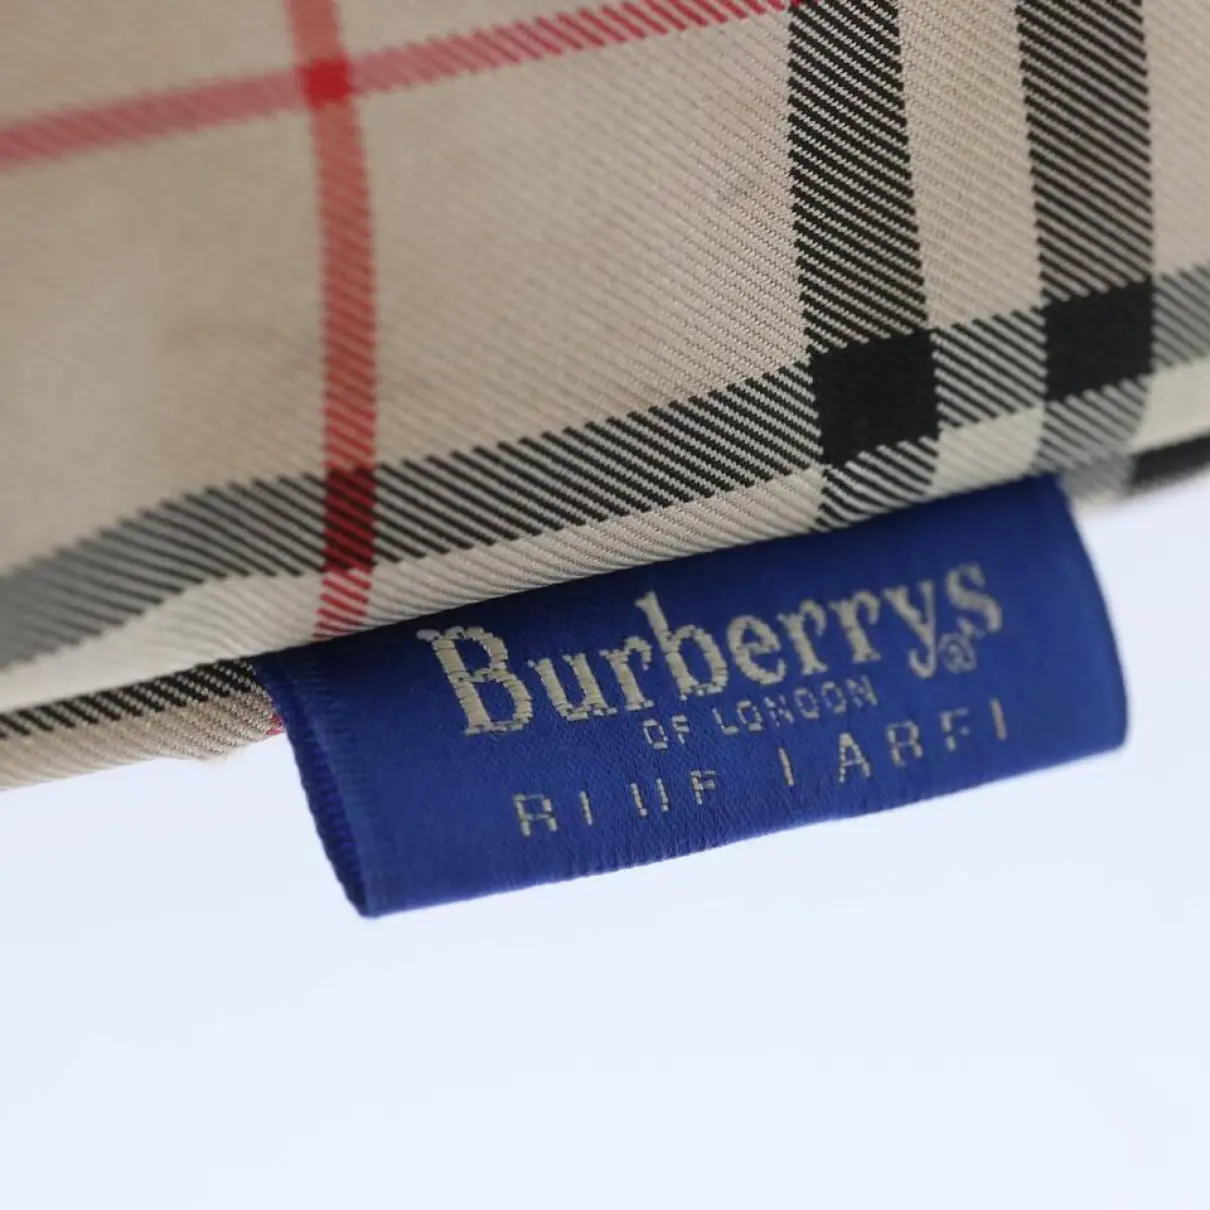 Luxury Burberry Handbags Women - Vintage